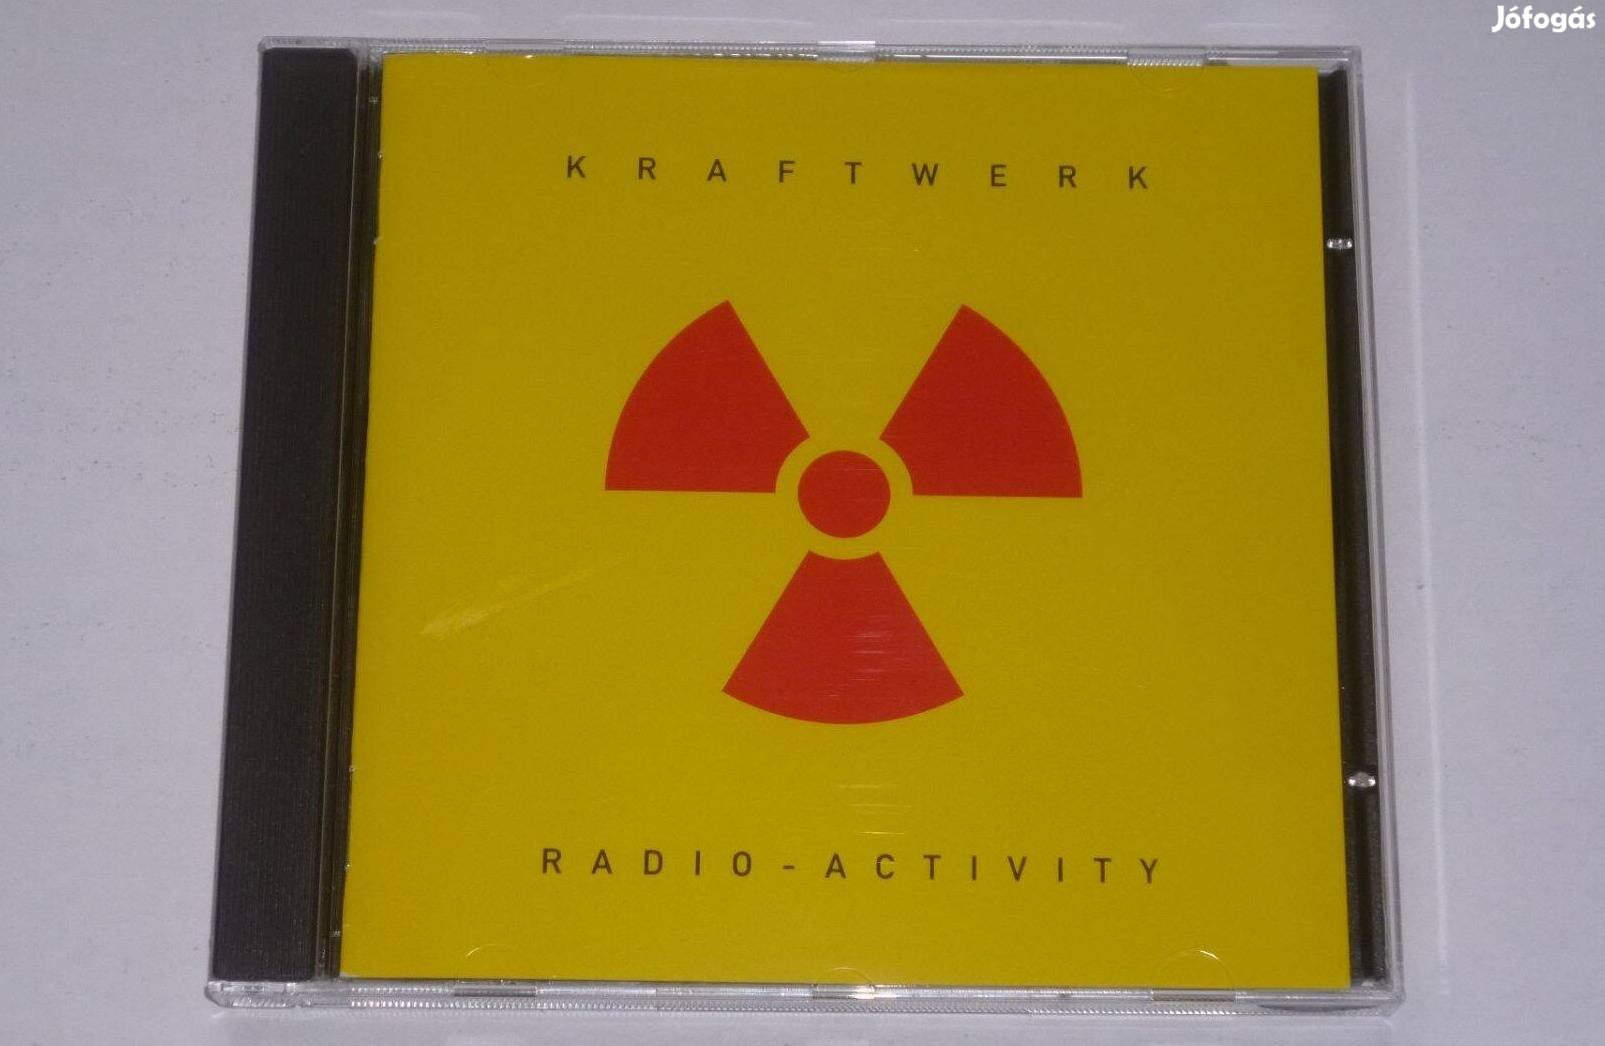 Kraftwerk - Radio- Aktivität CD